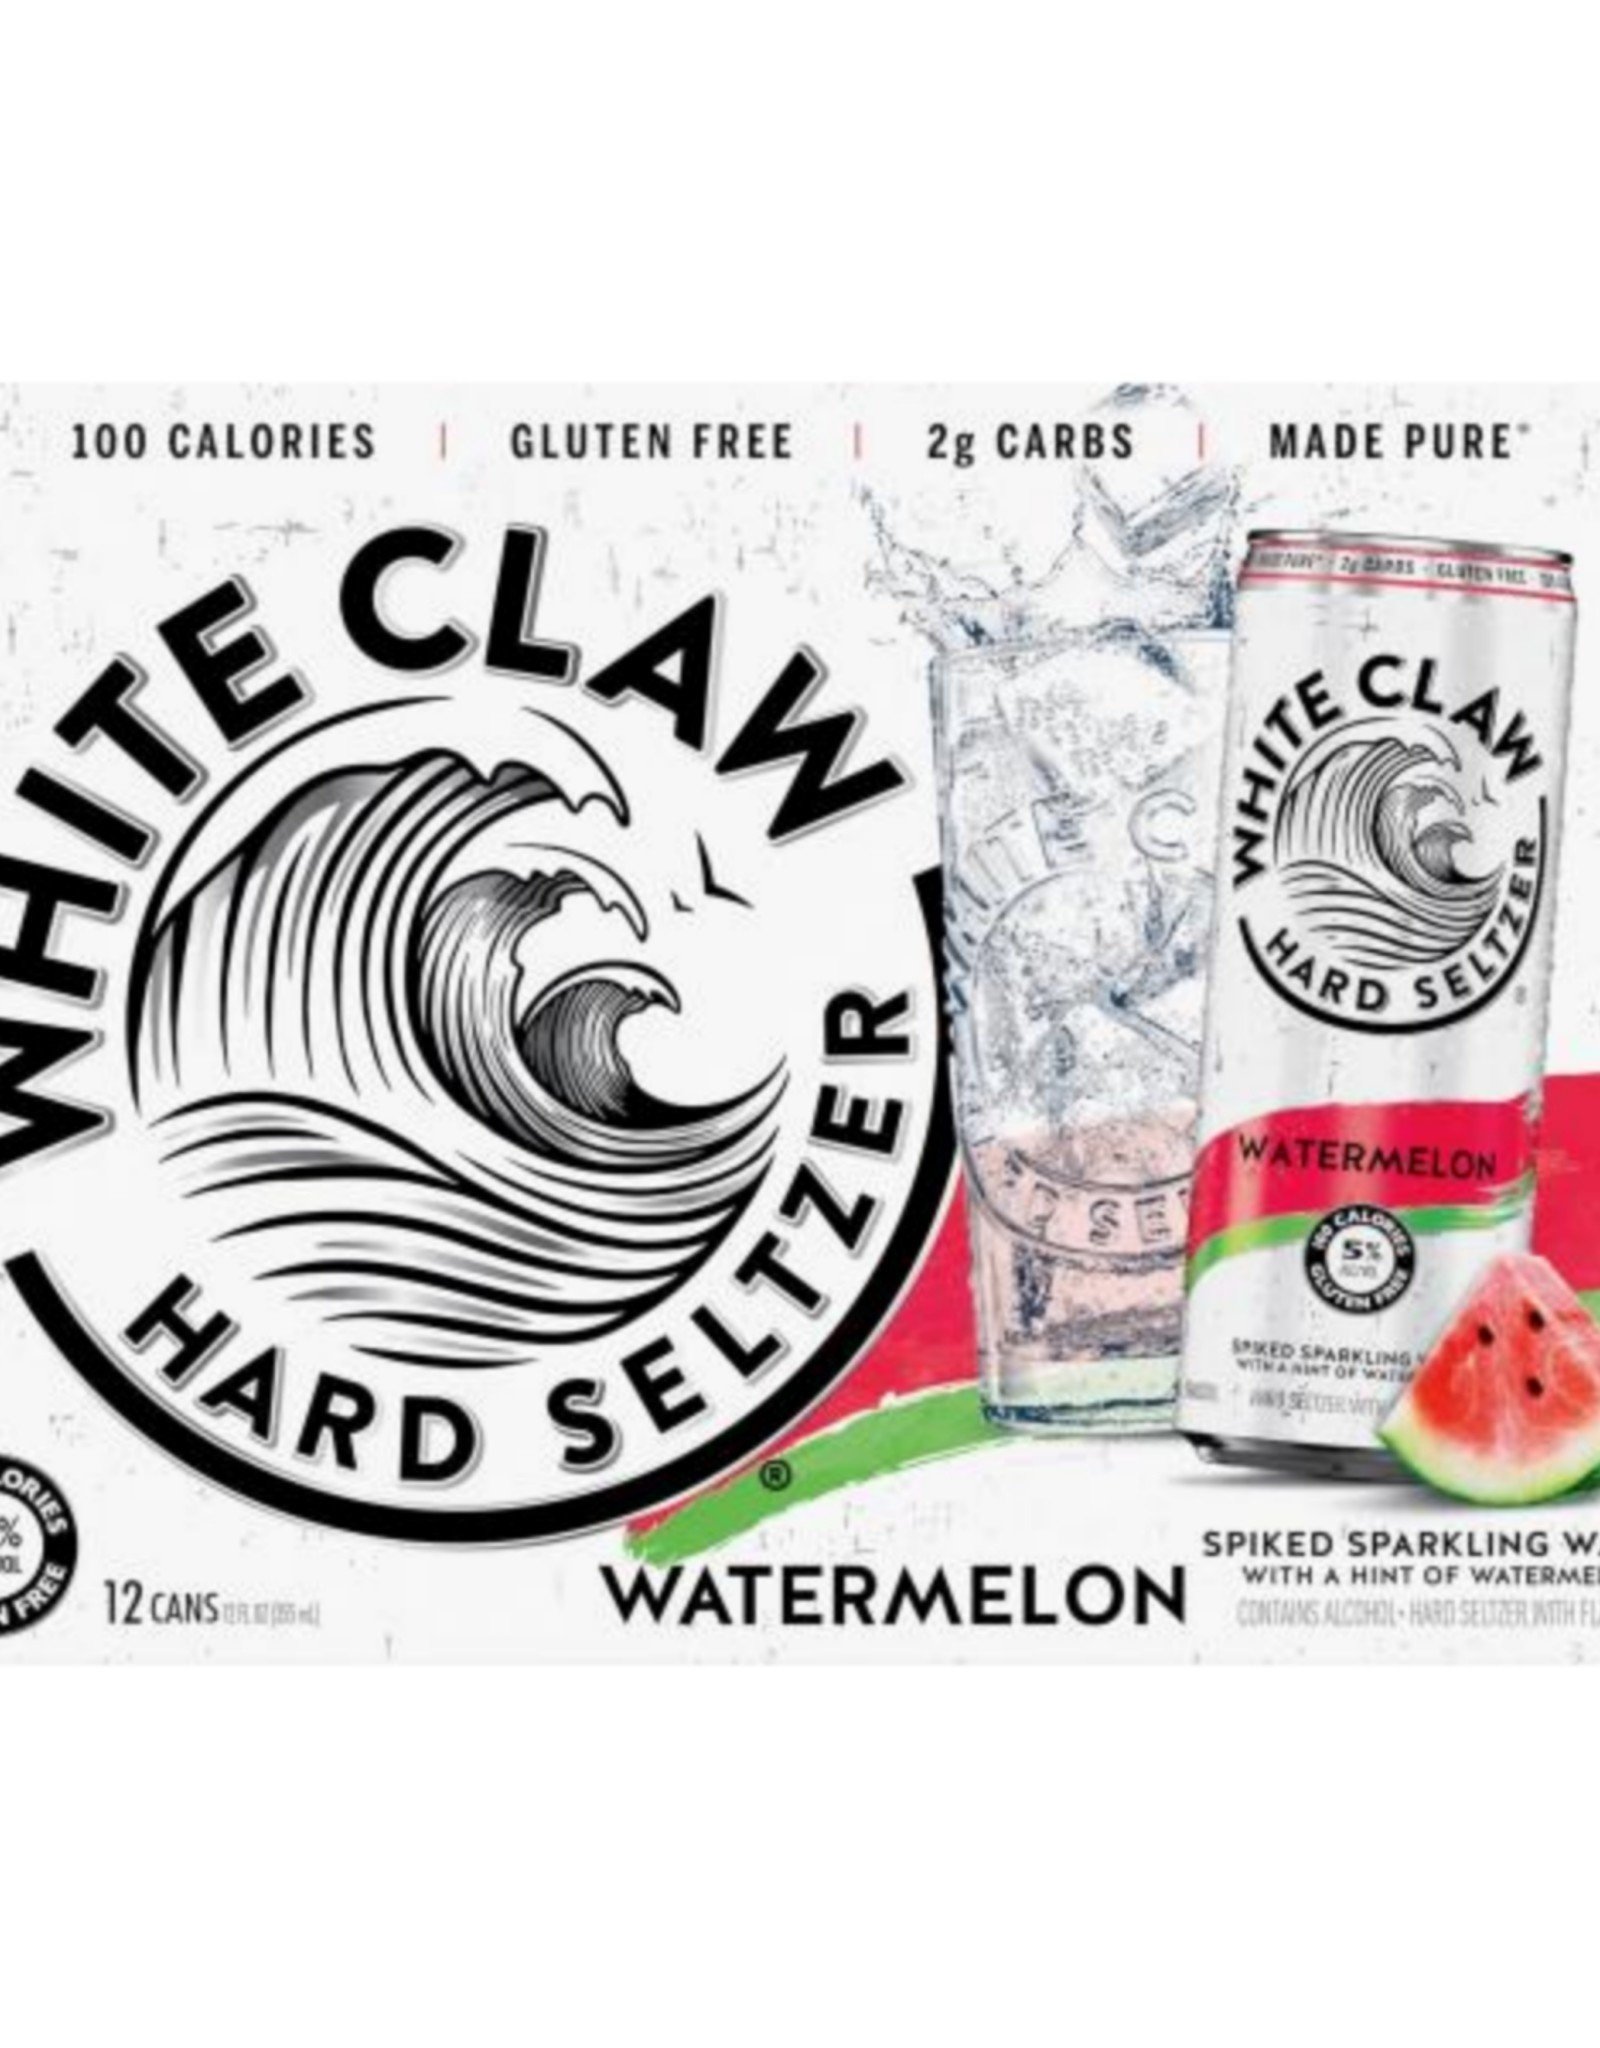 White Claw White Claw - Watermelon - 12pk - 12oz -  Cans